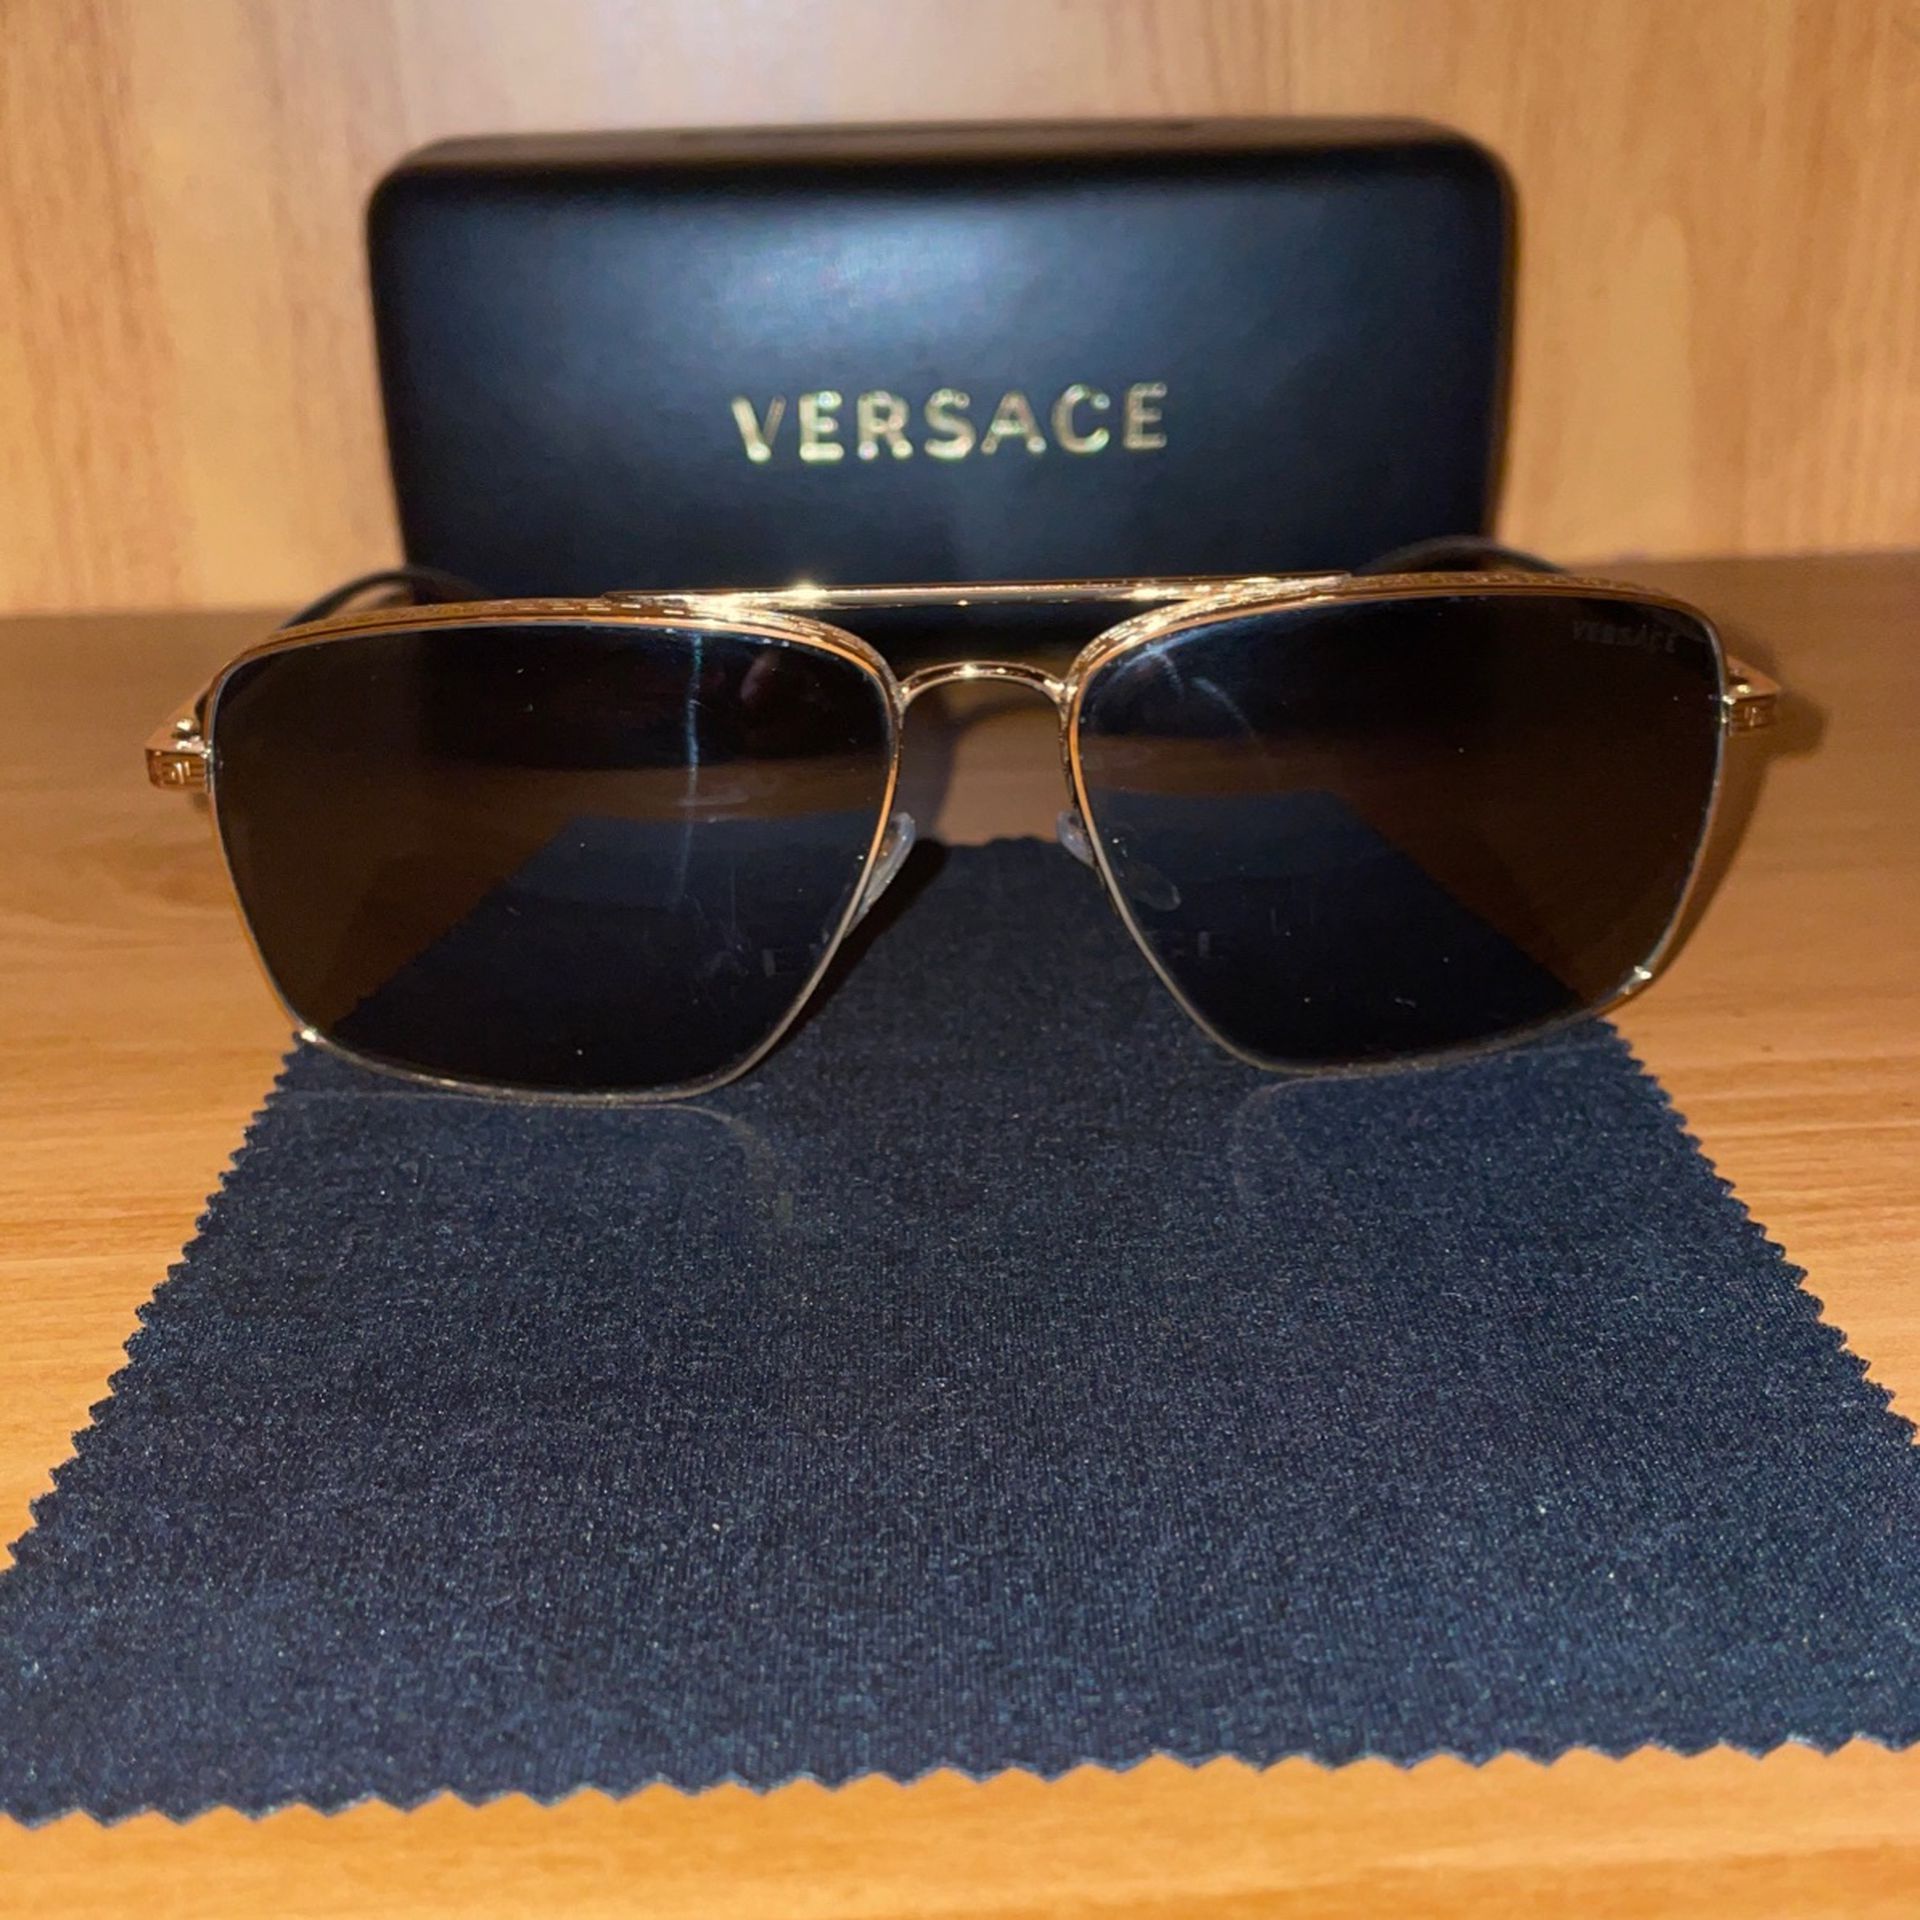 Versage Glasses